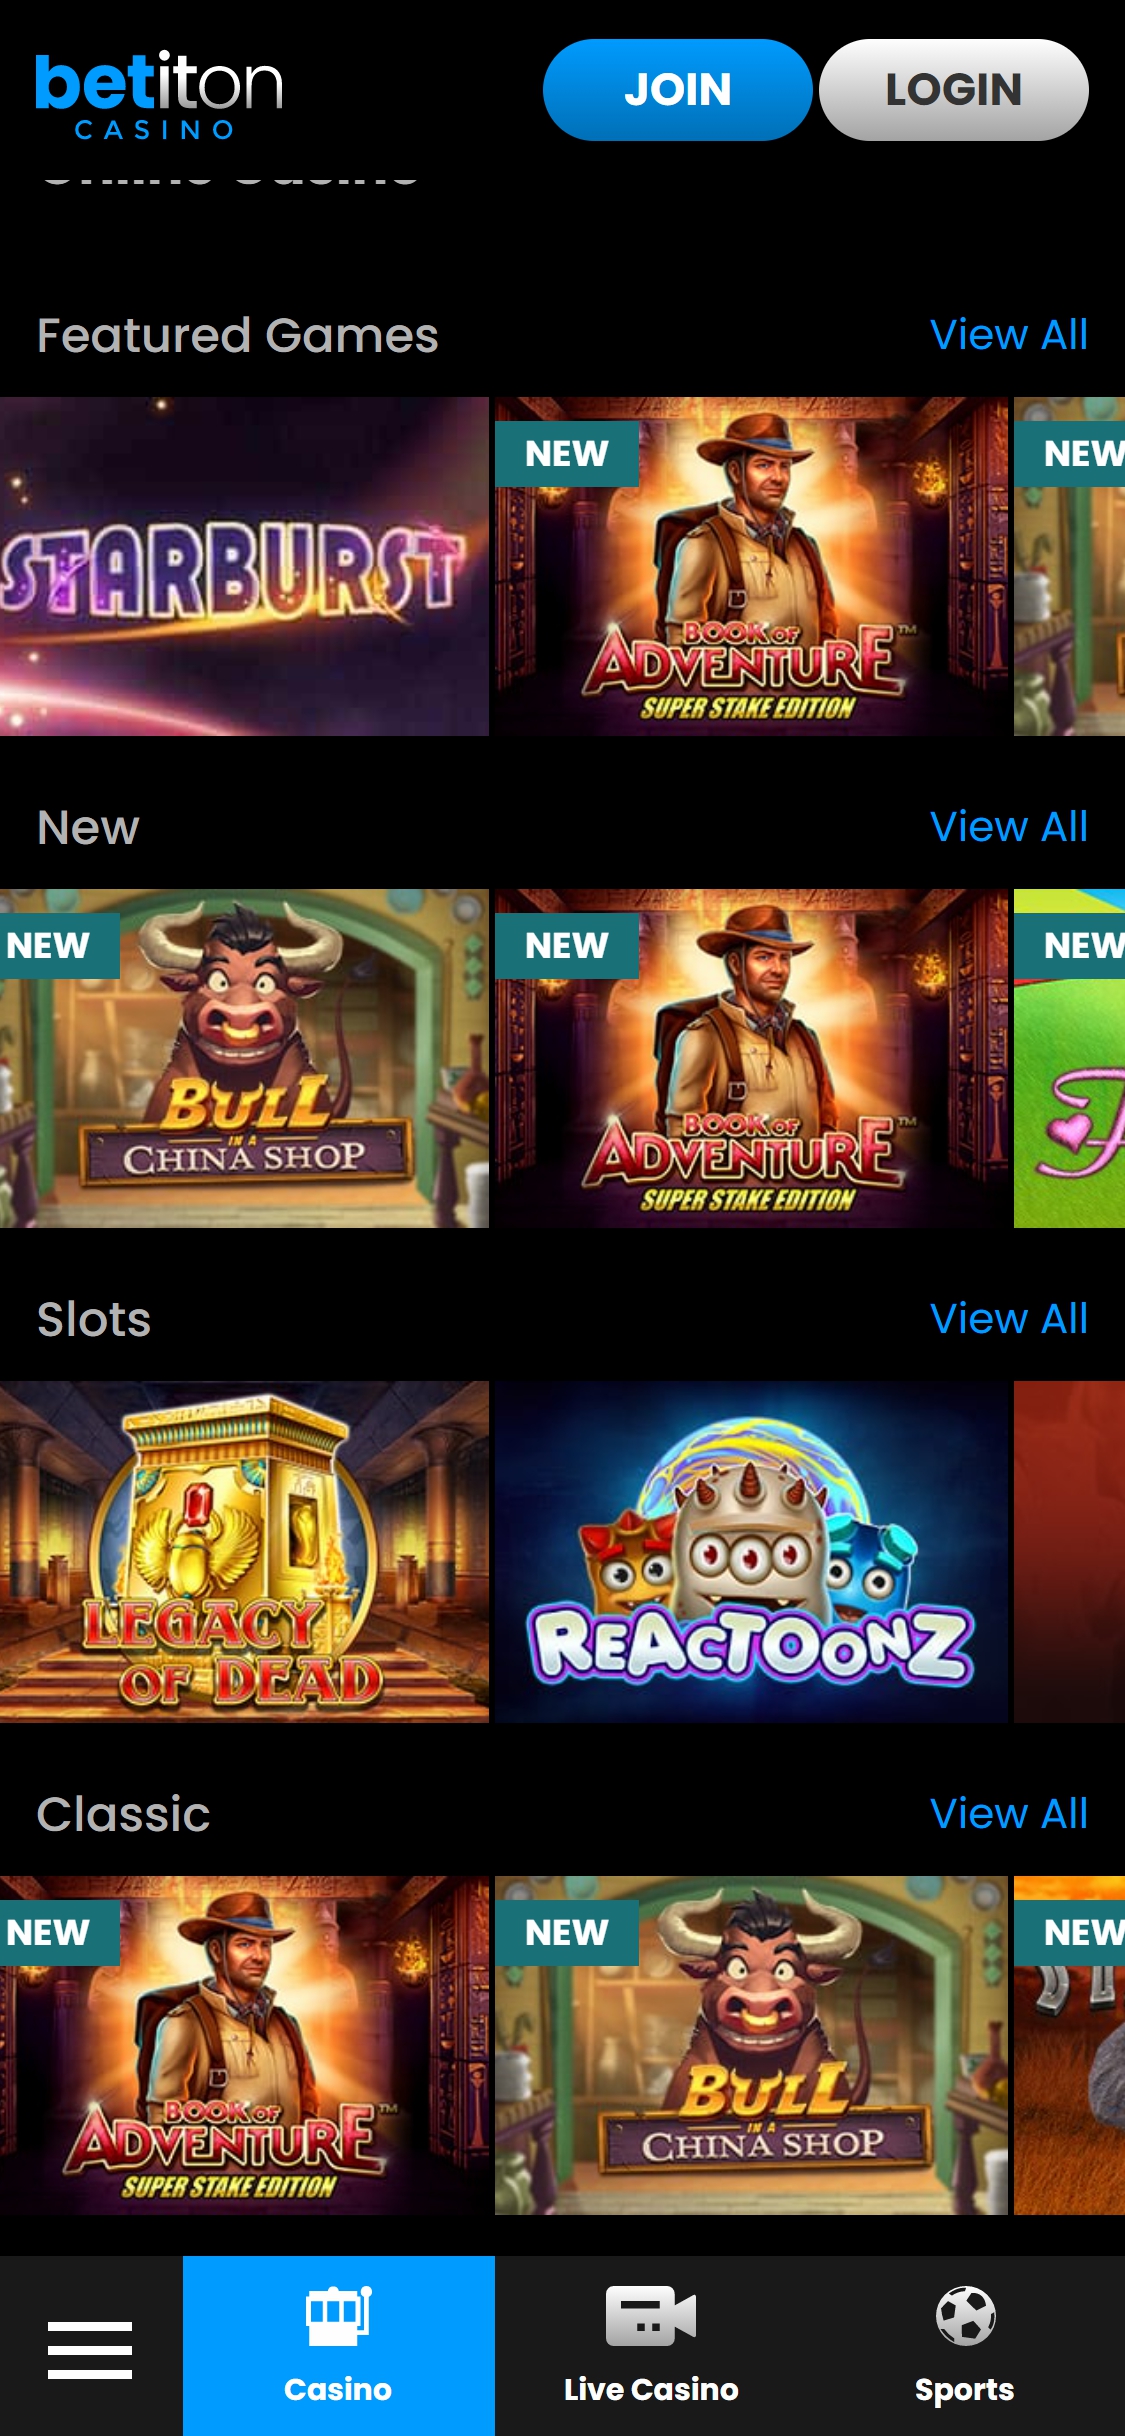 Betiton Casino Mobile Games Review